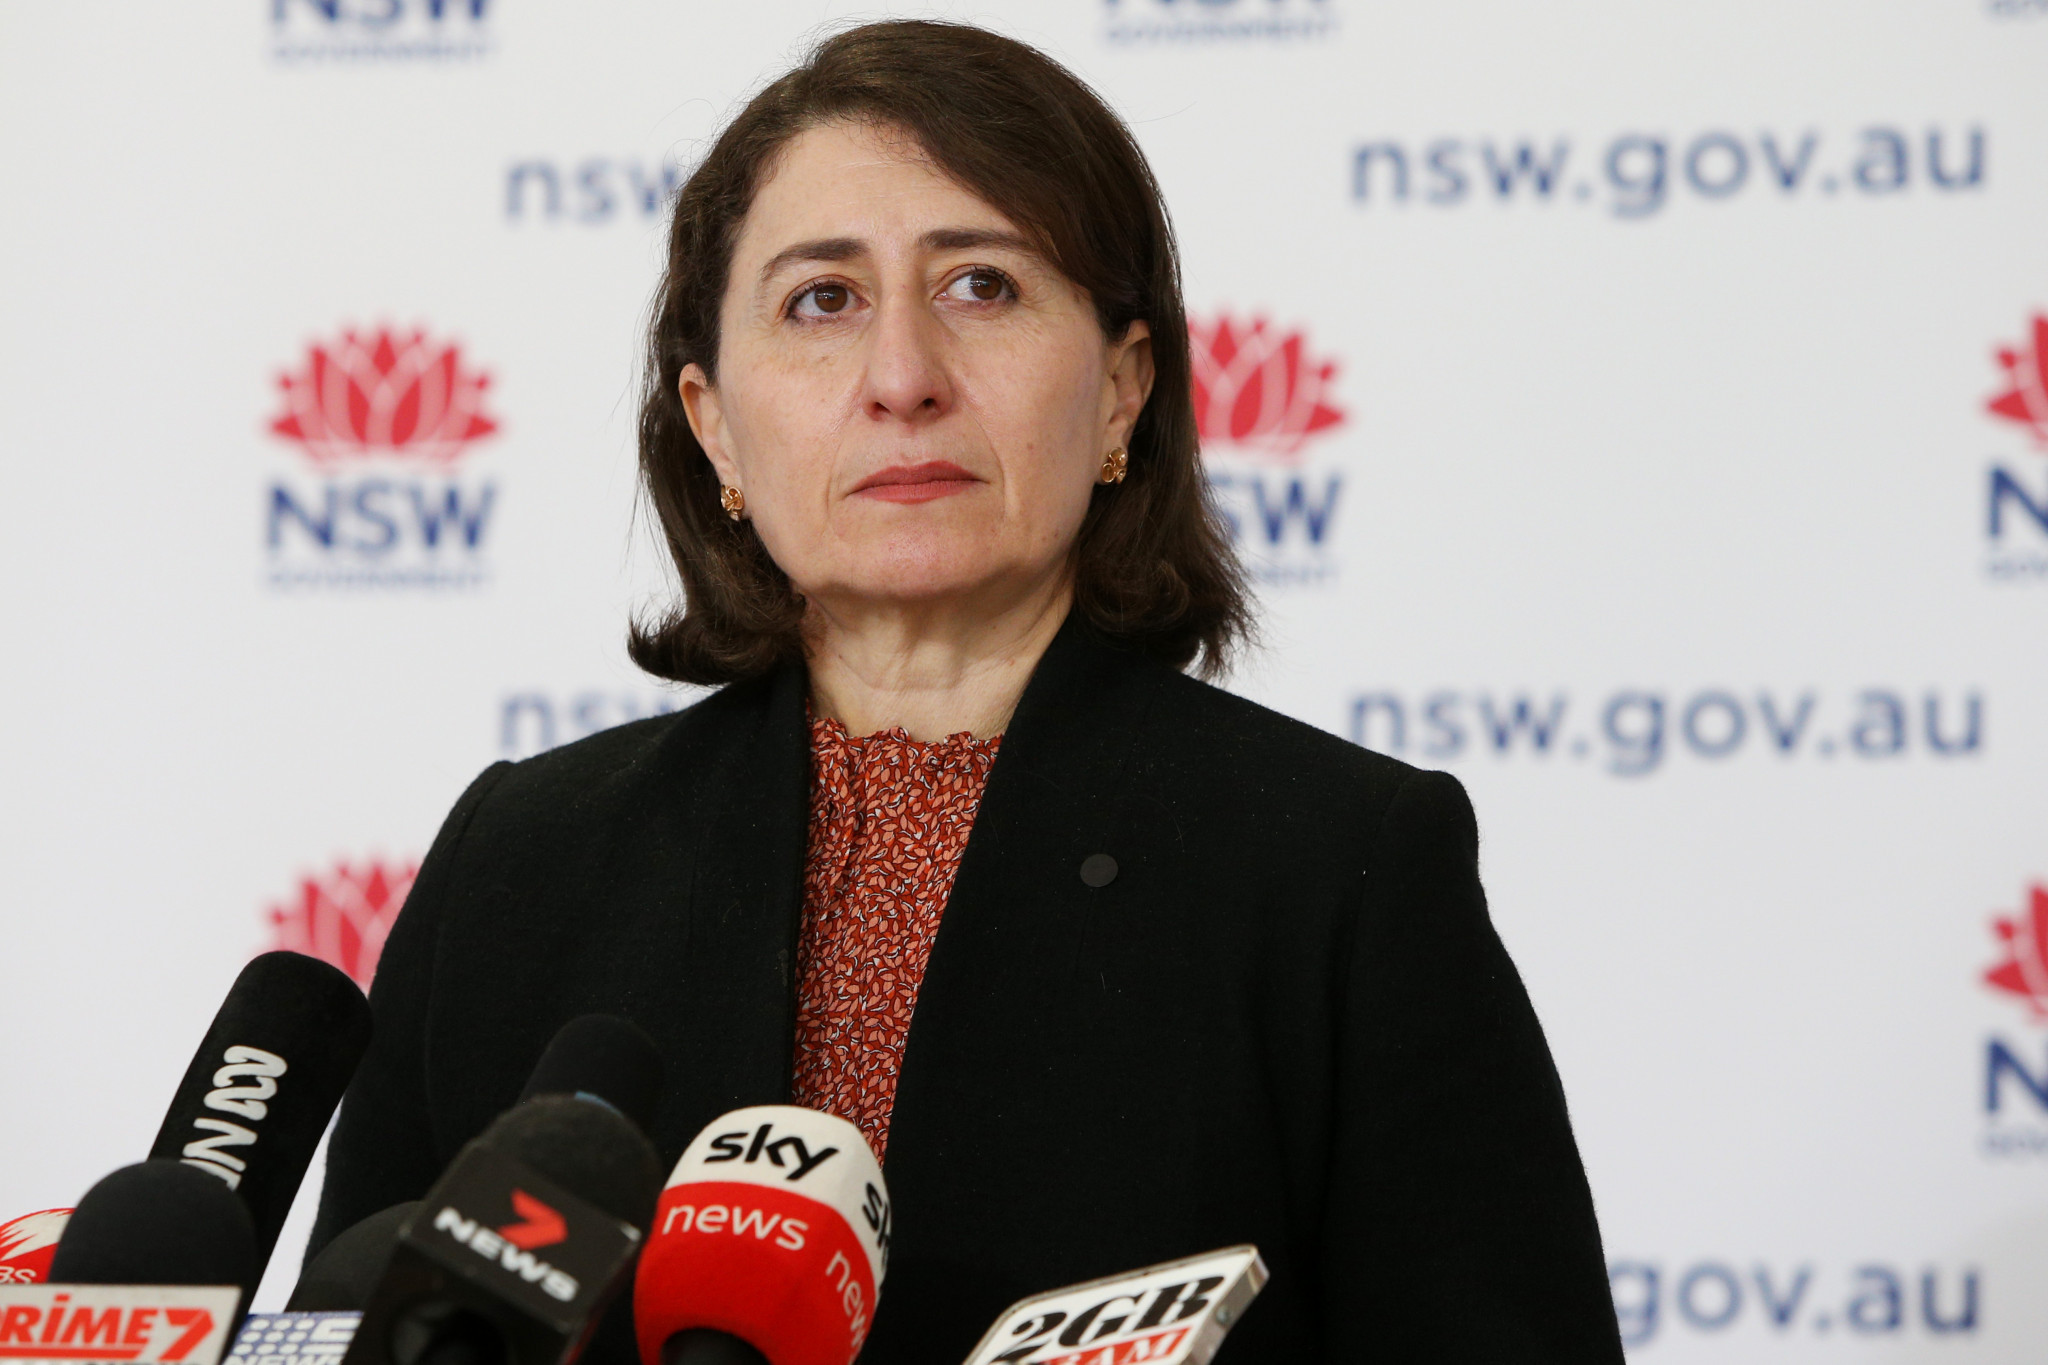 New South Wales Premier Gladys Berejiklian previously said she is 